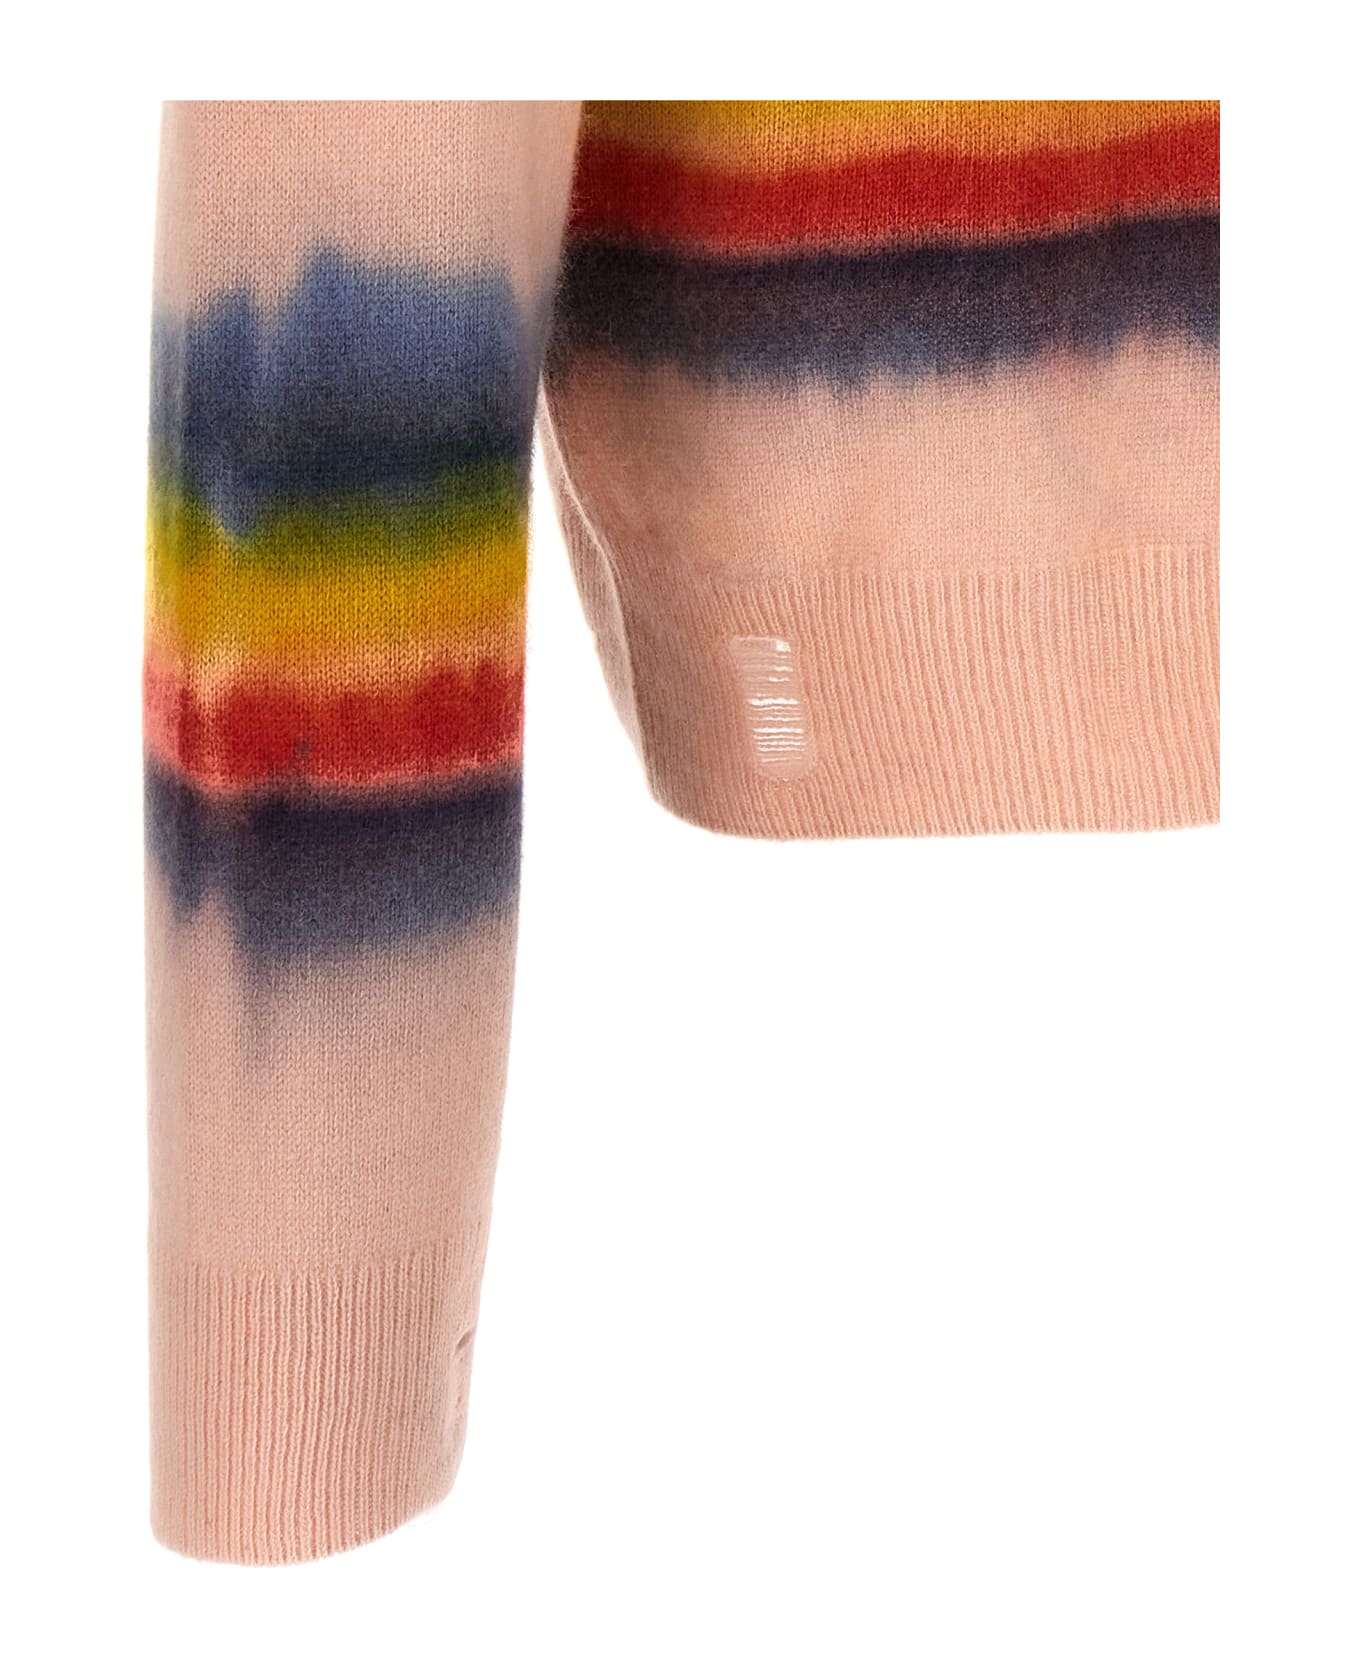 AMIRI 'rainbow Tie Dye' Sweater - Multi